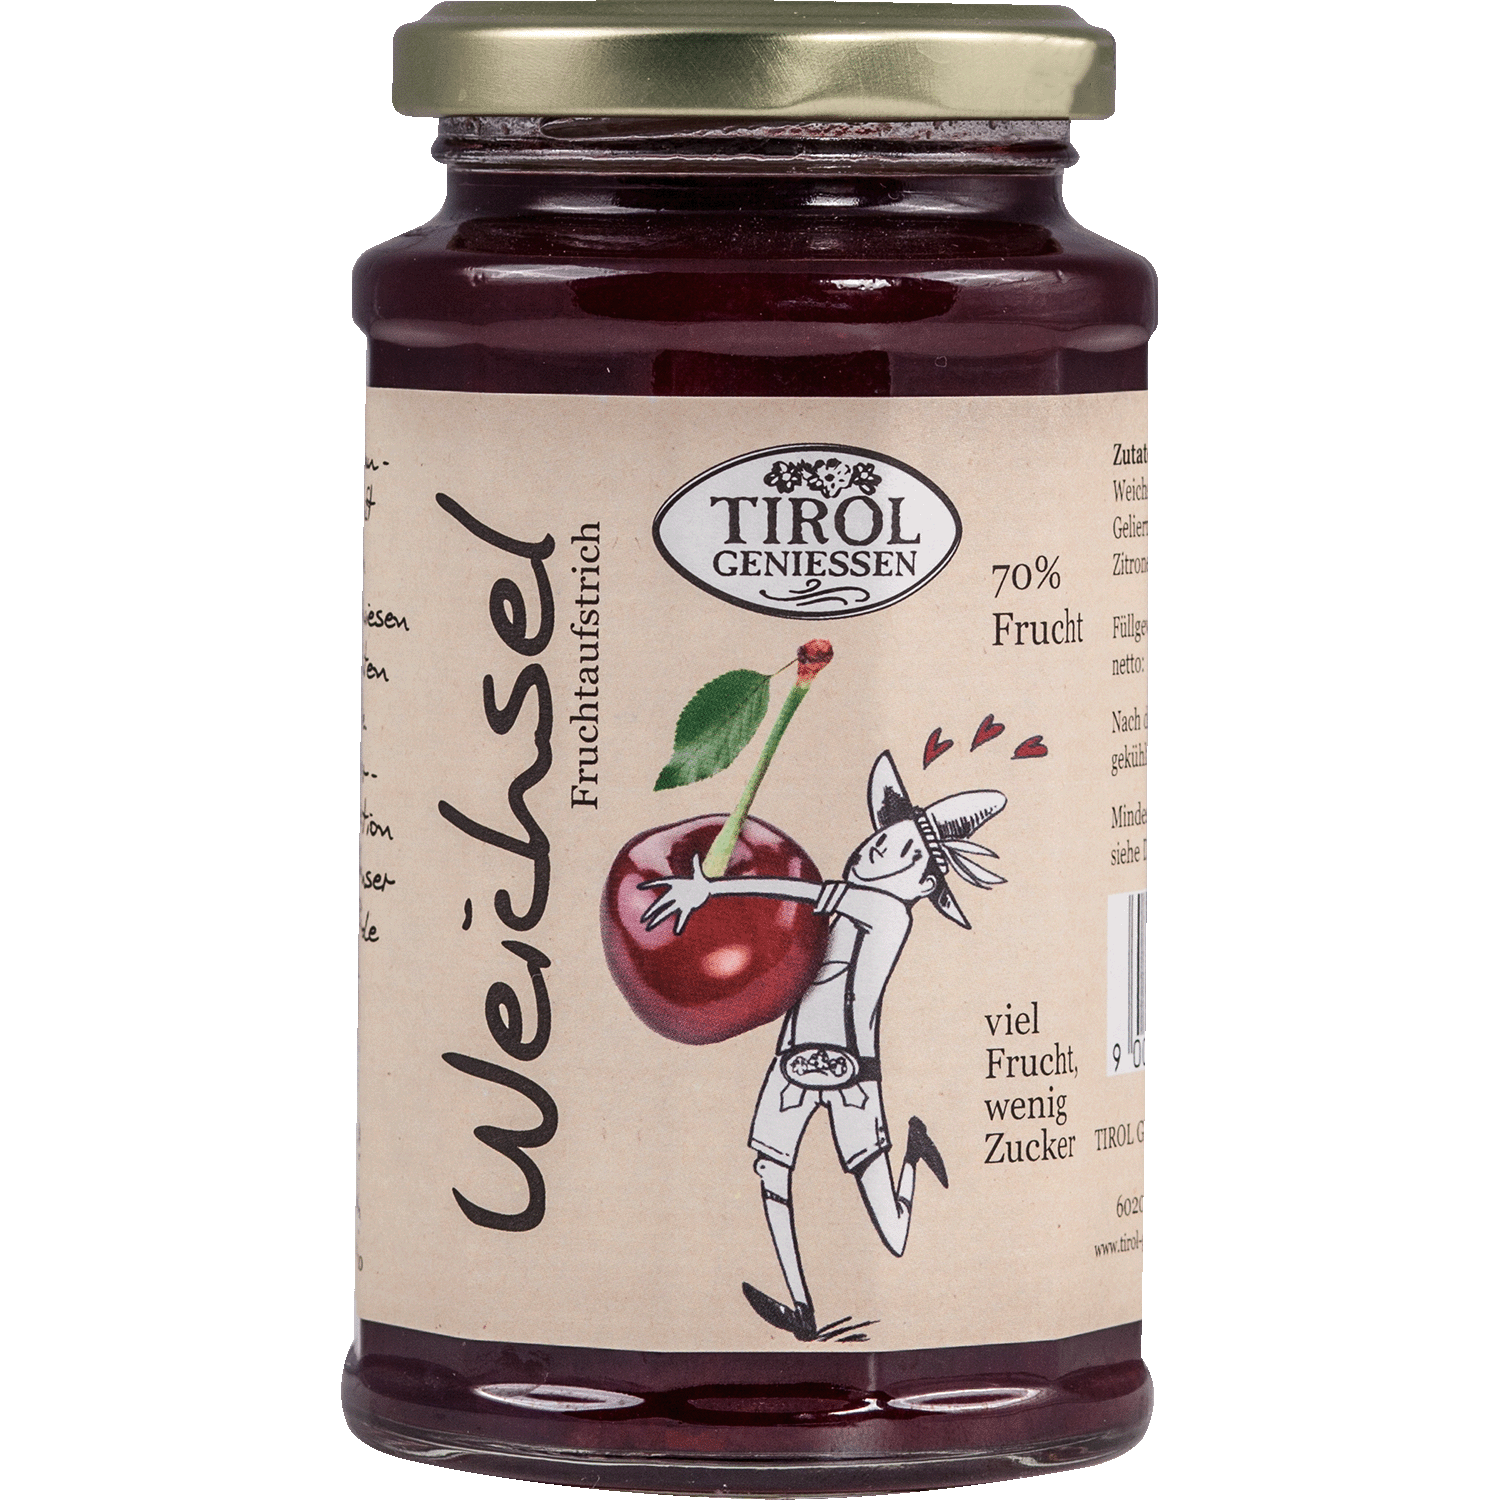 Sour Cherry Jam from Austria from Tirol Geniessen